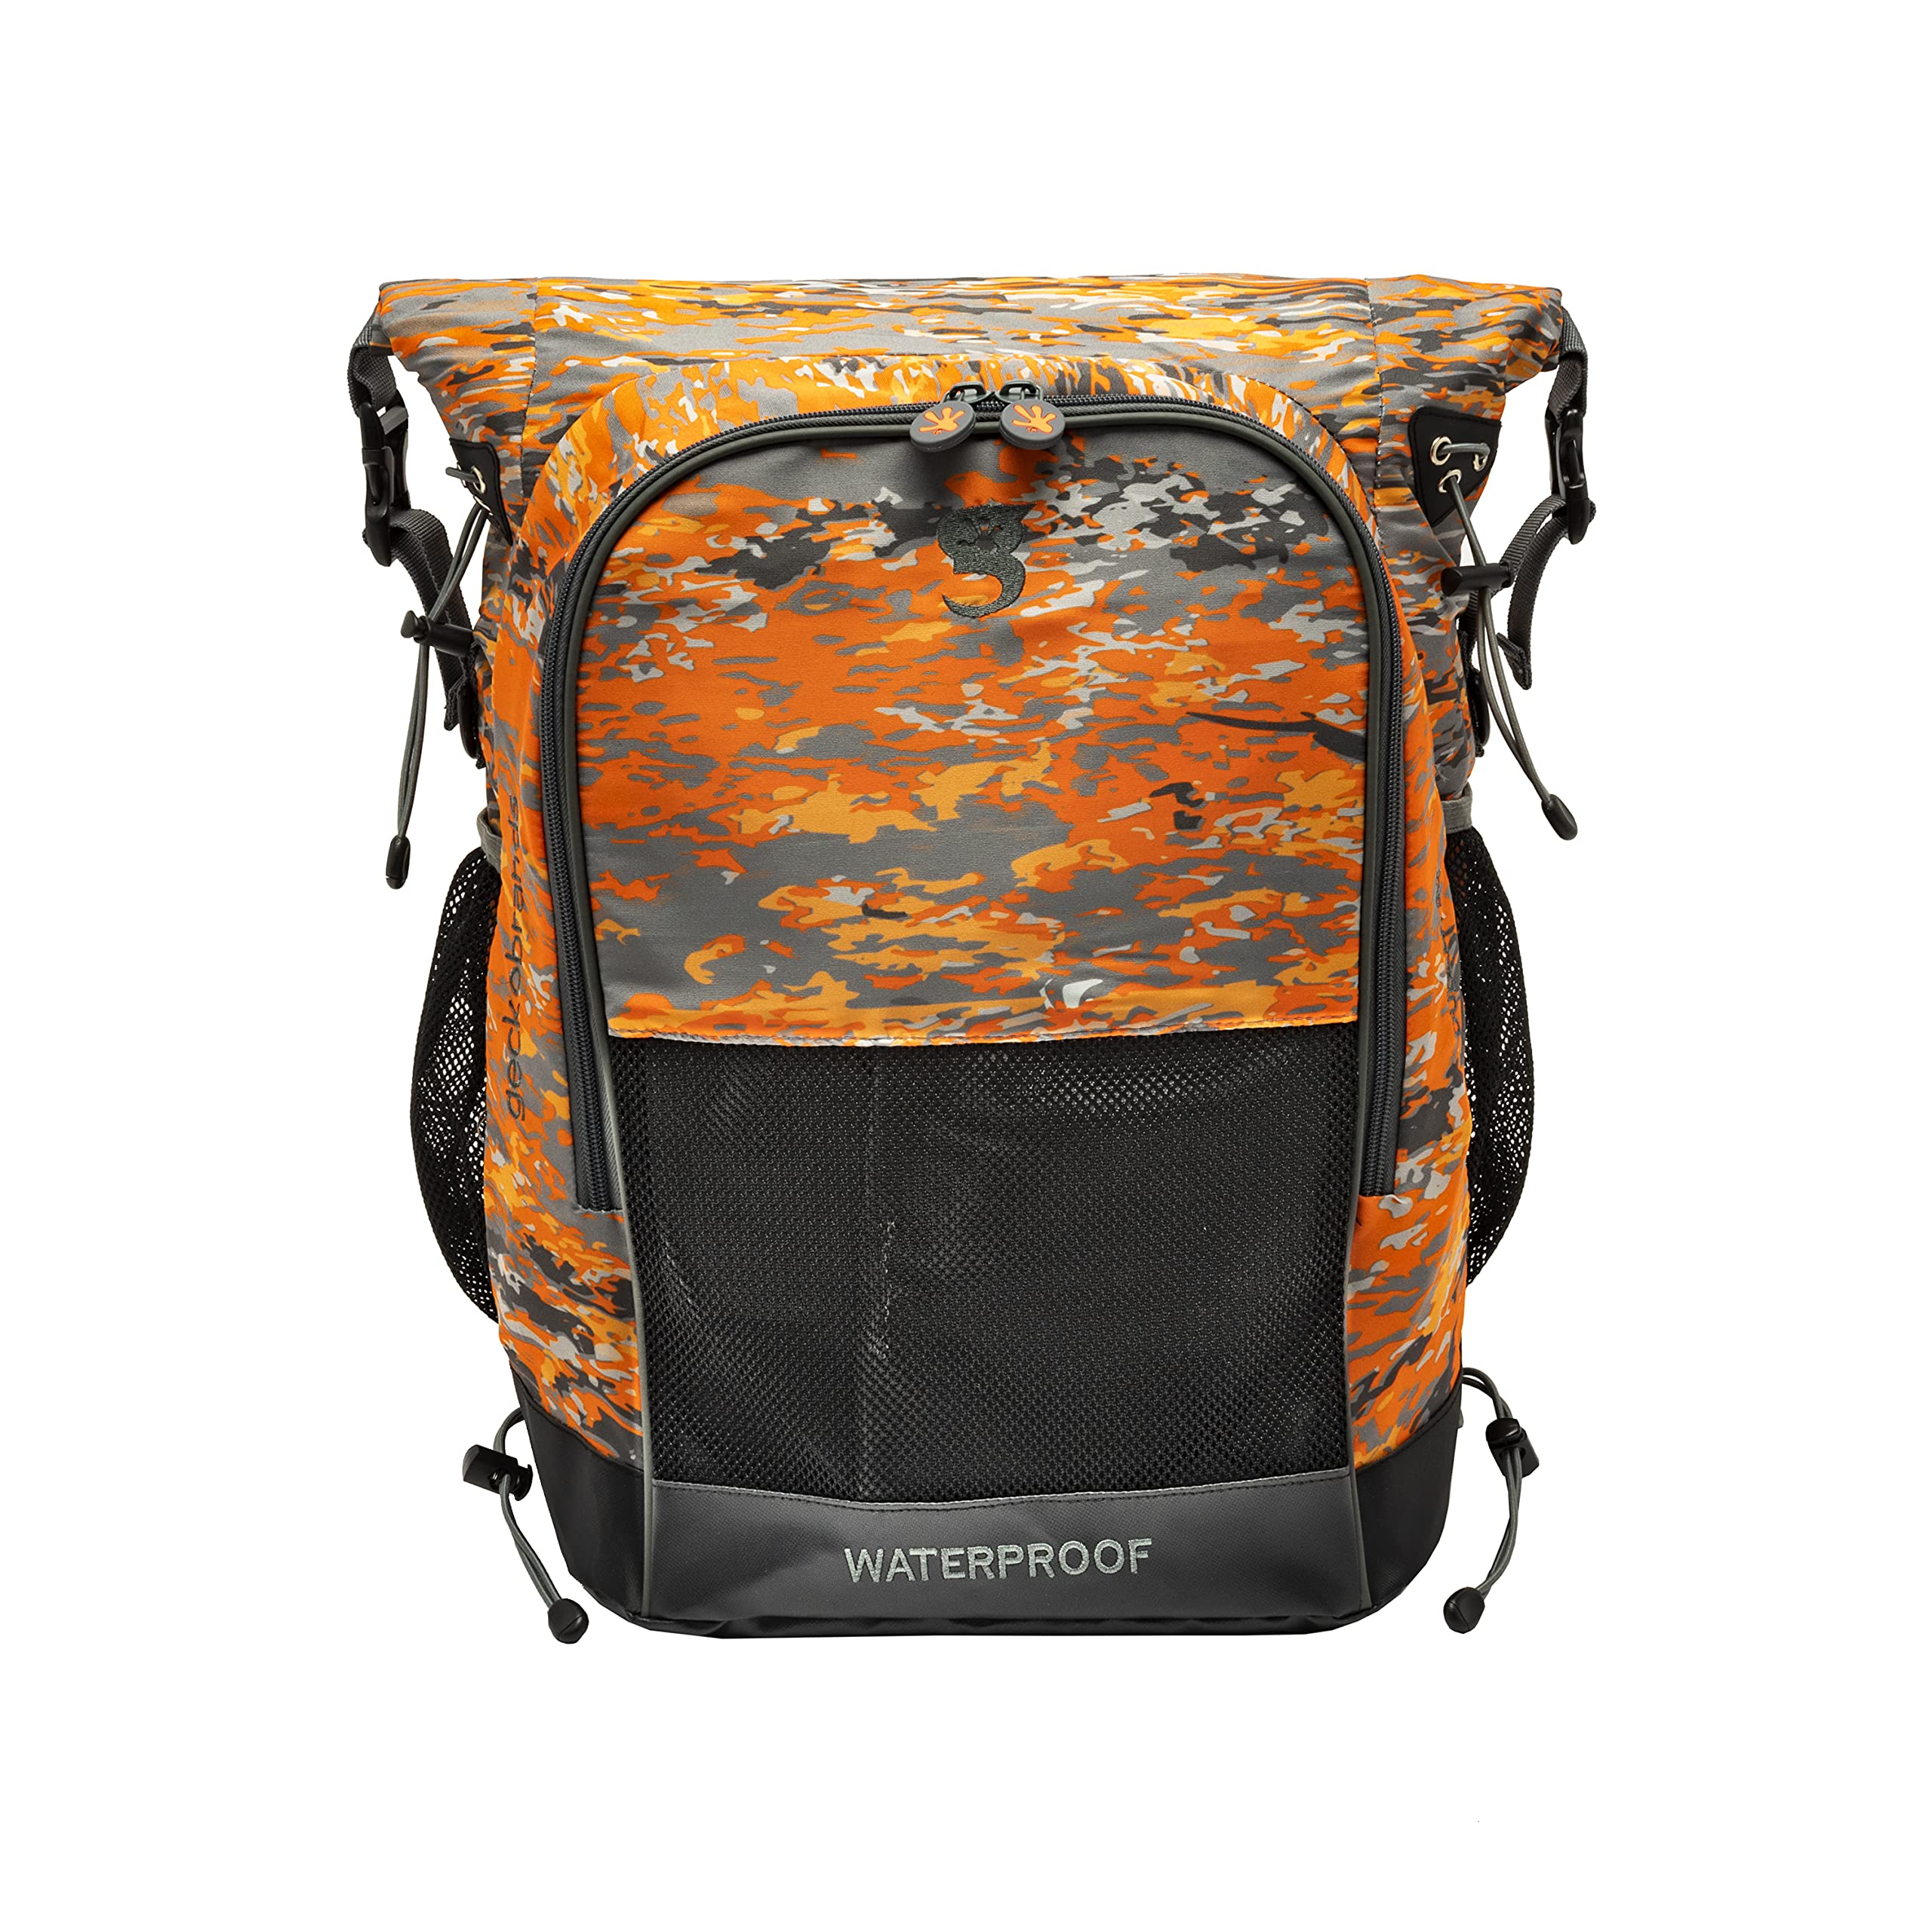 geckobrands Waterproof Drawstring 2.0 Backpack